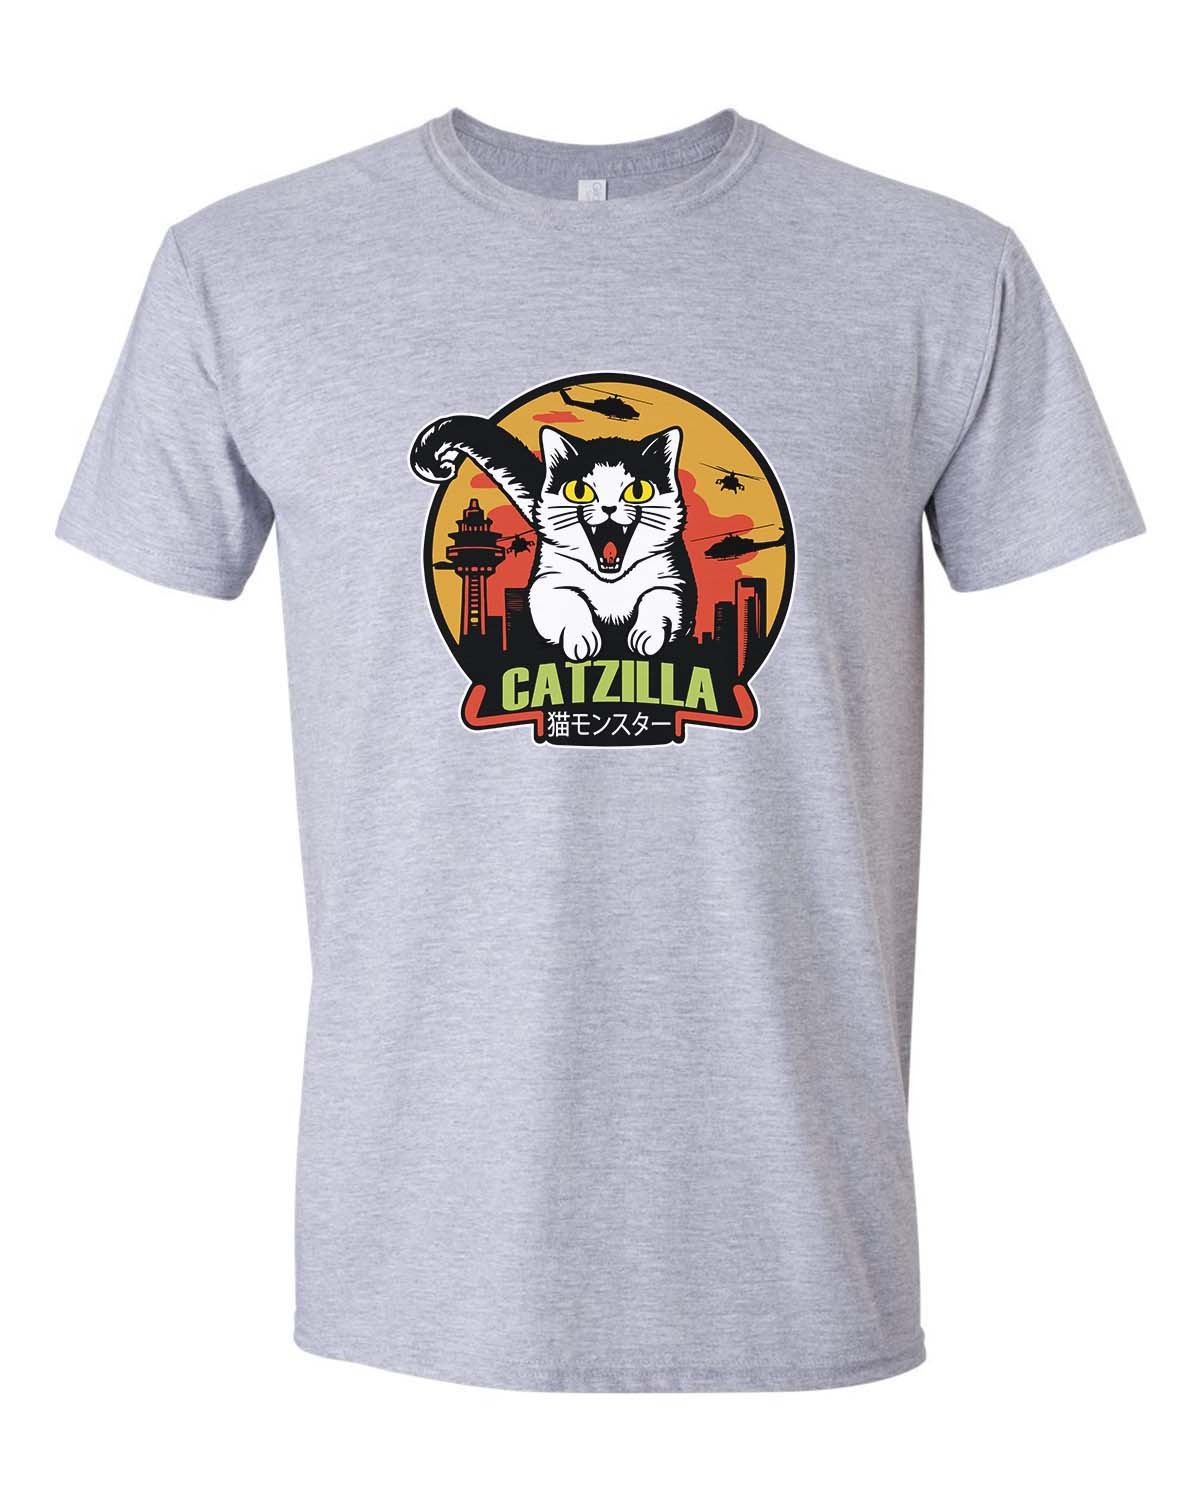 Catzilla Attacks - Unisex T-Shirt